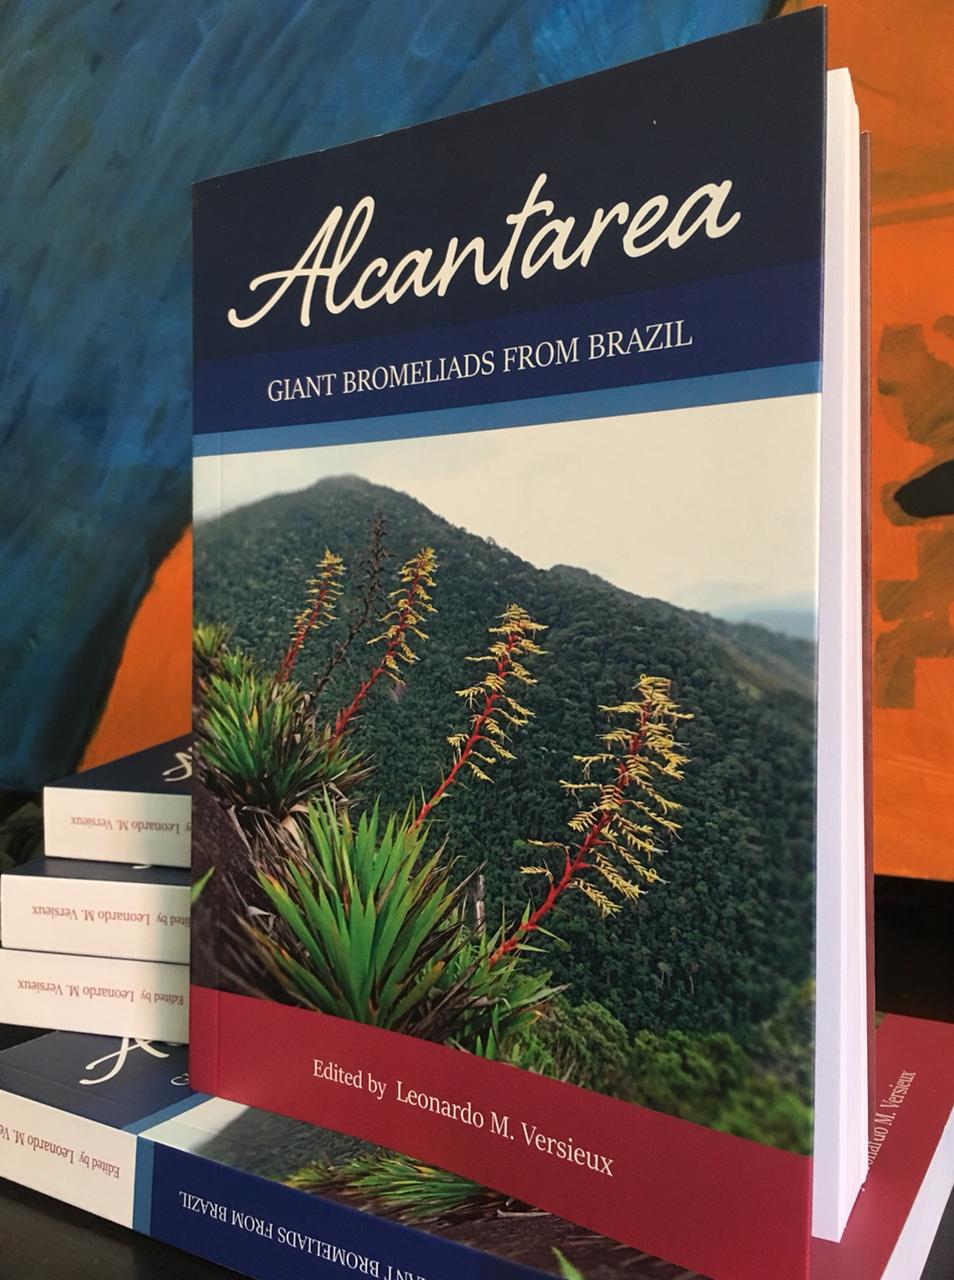 Alcantarea Giant Bromeliads from Brazil